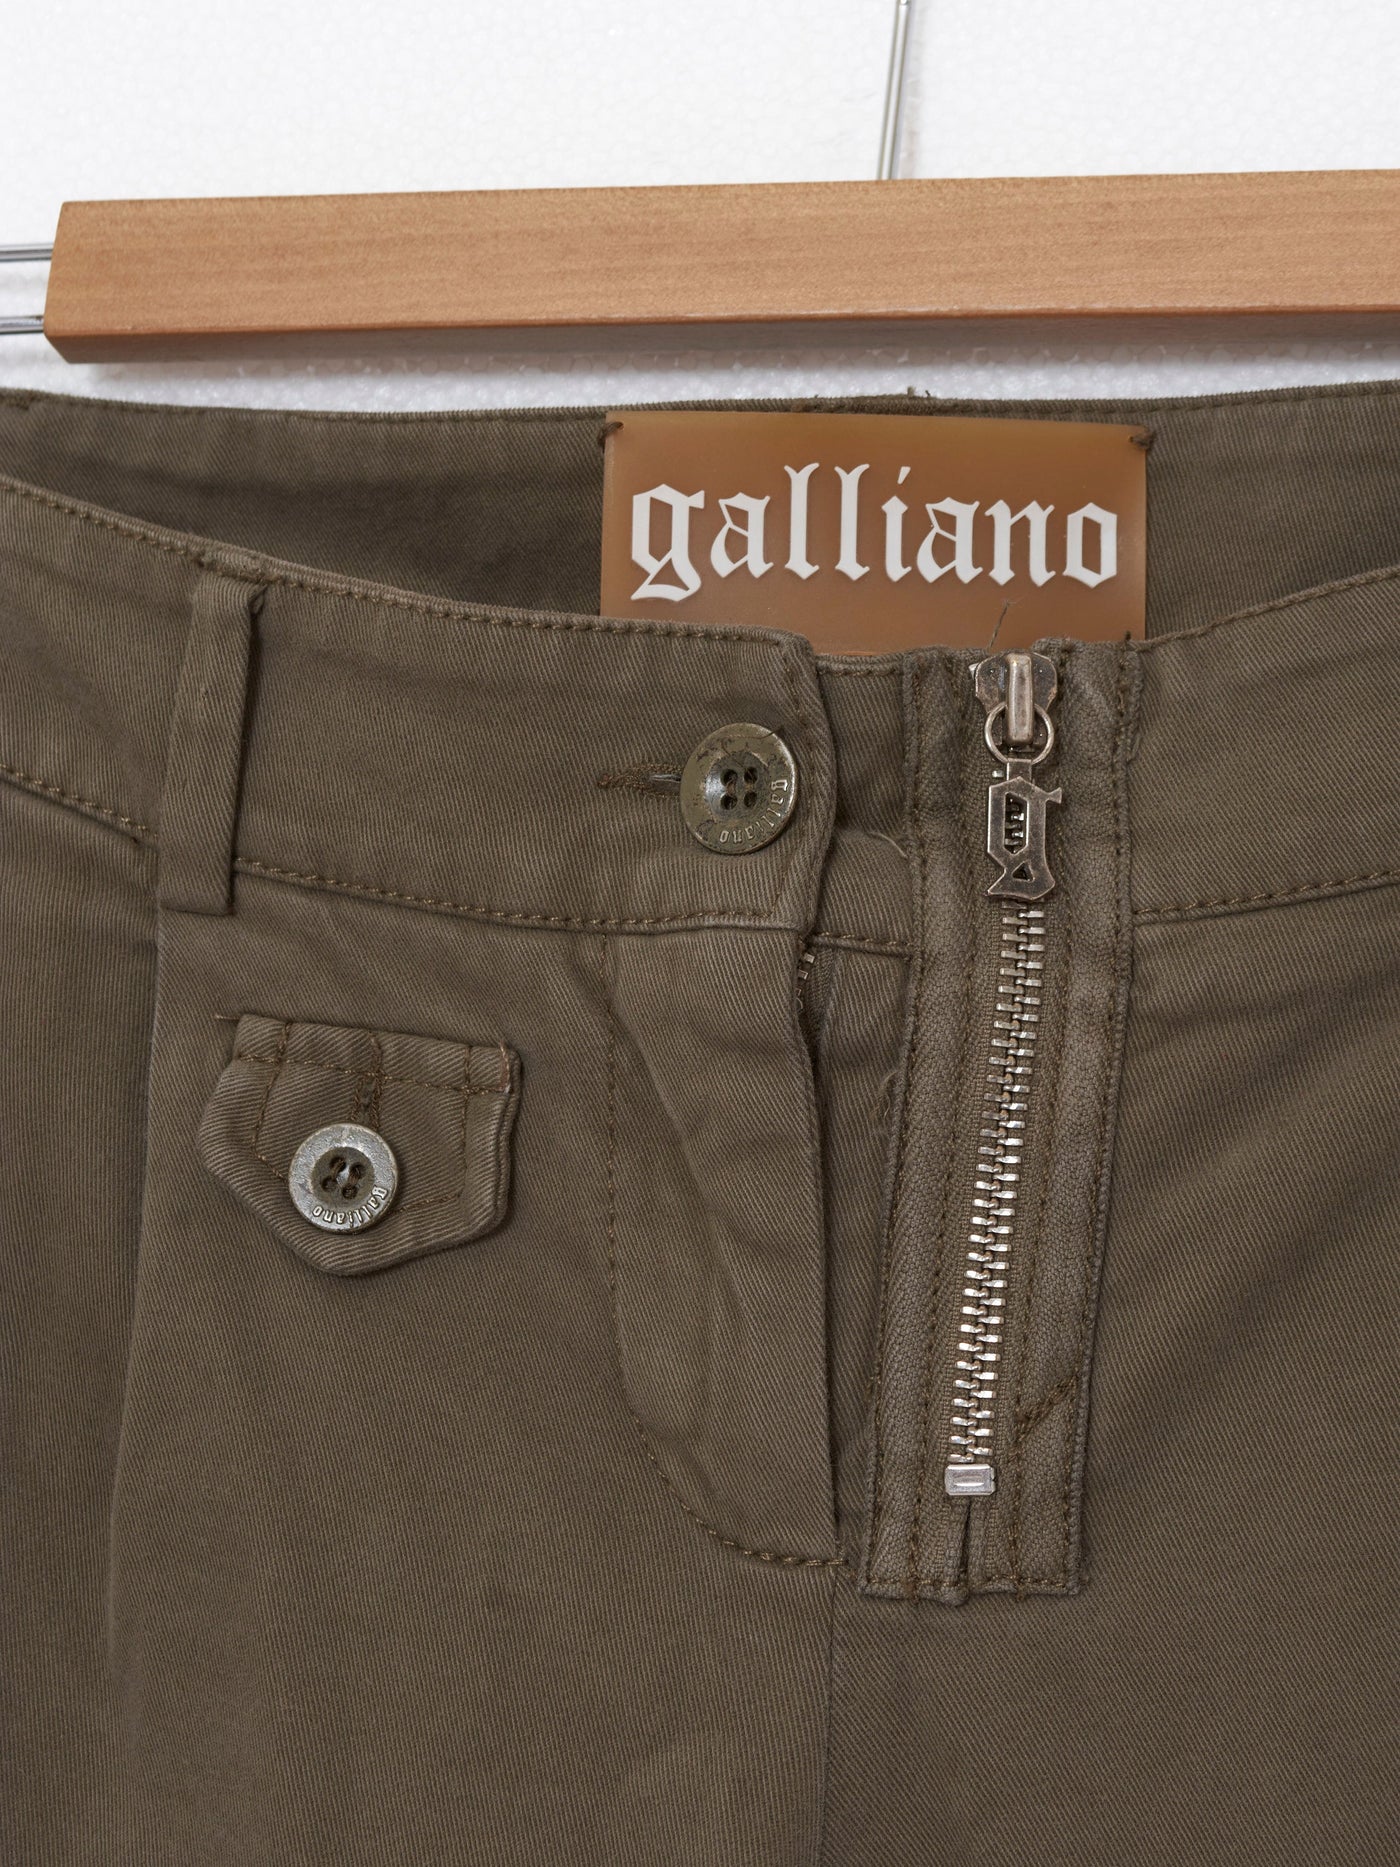 John Galliano pants in military green cotton